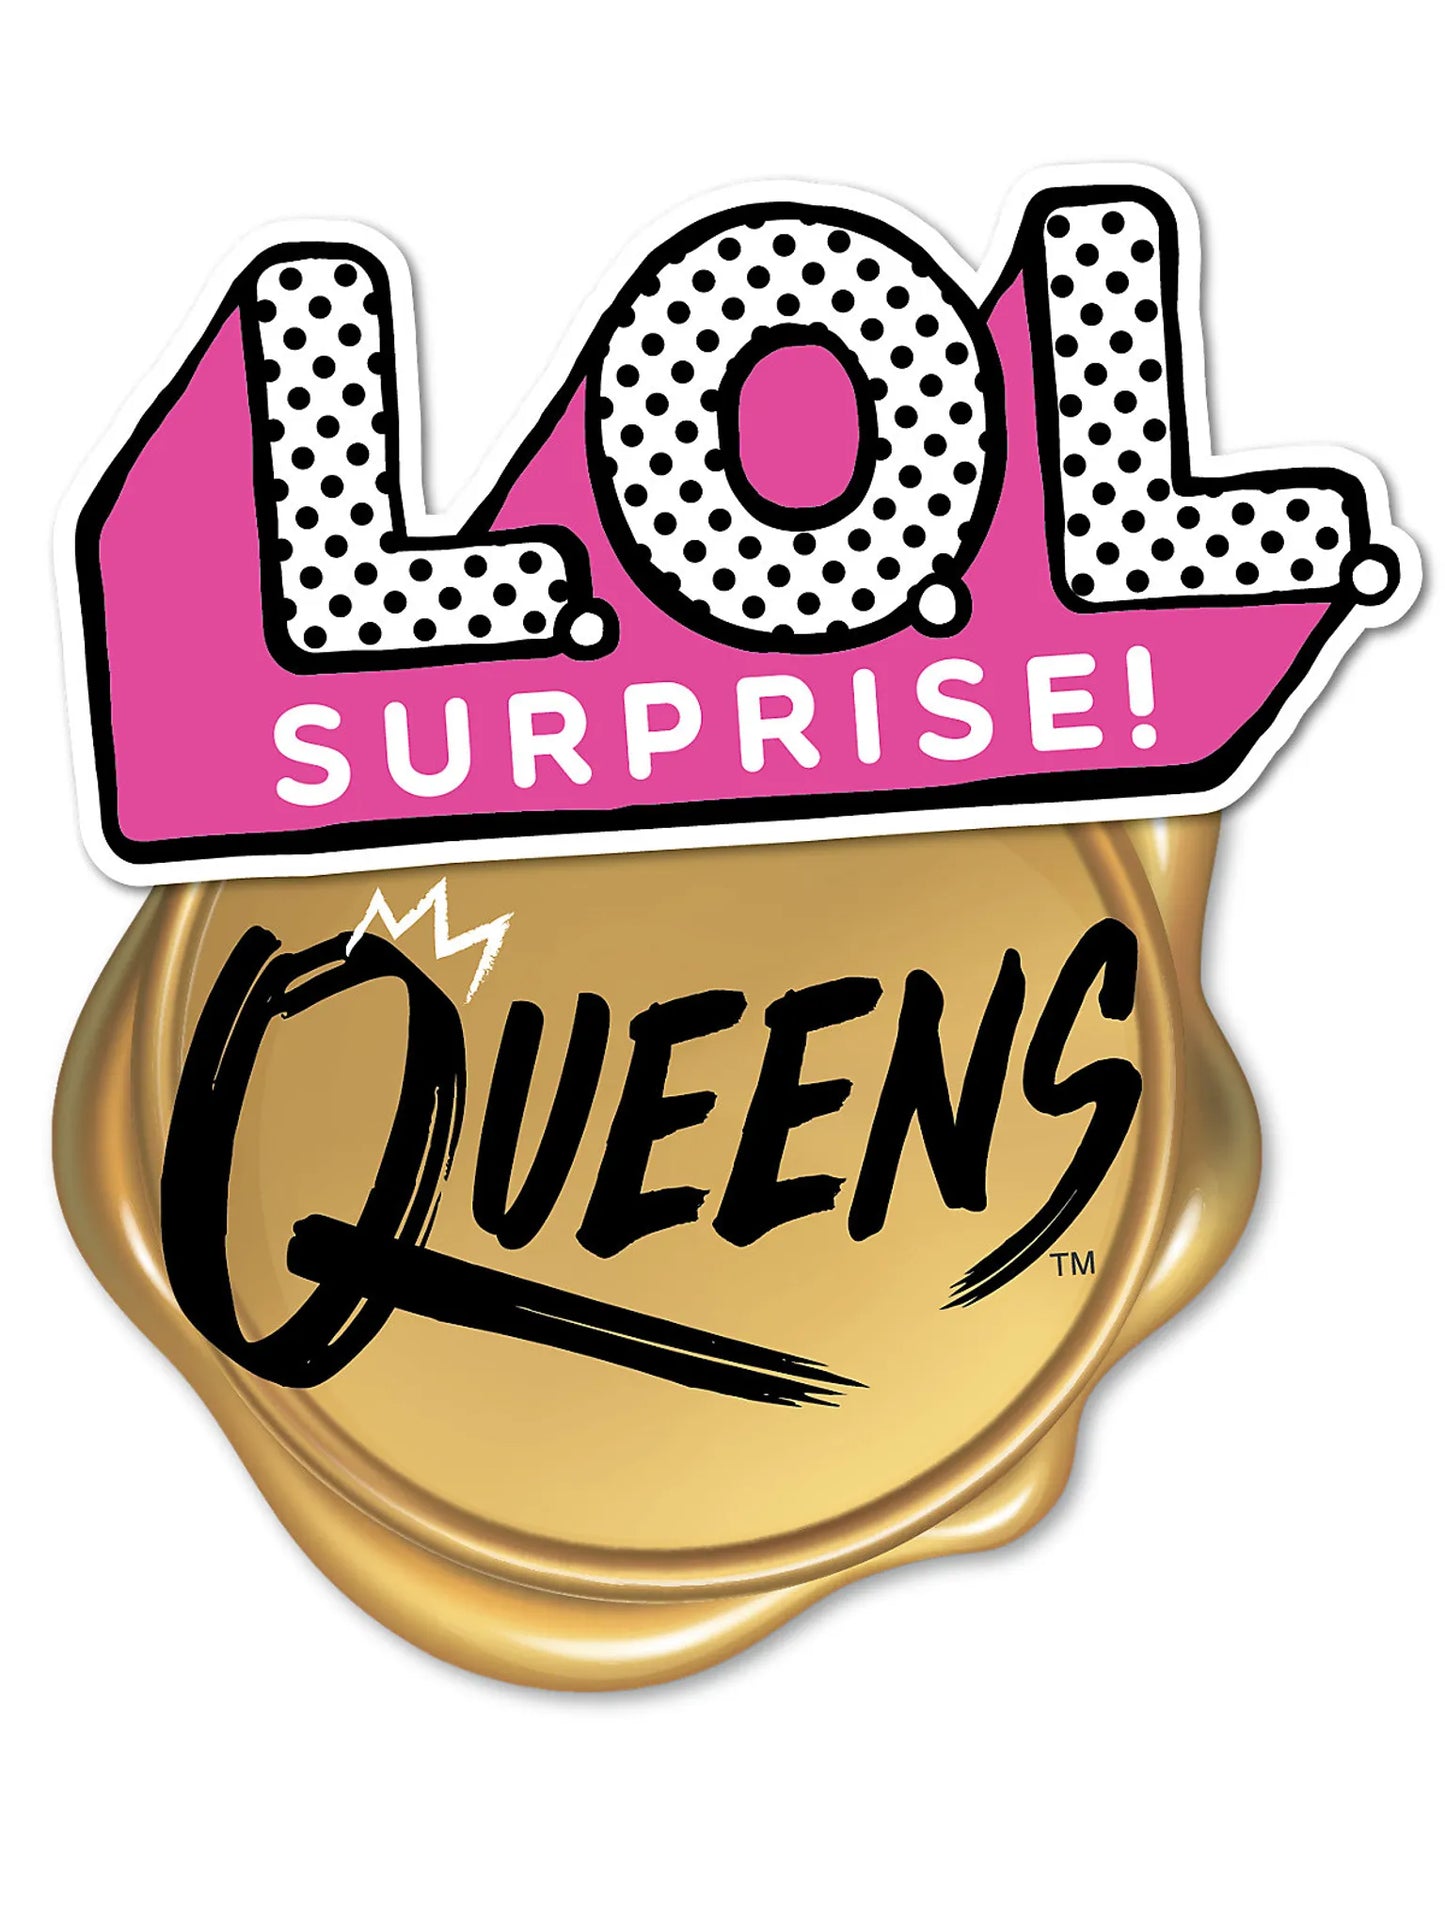 L.O.L. Surprise Queens Doll Asst in PDQ